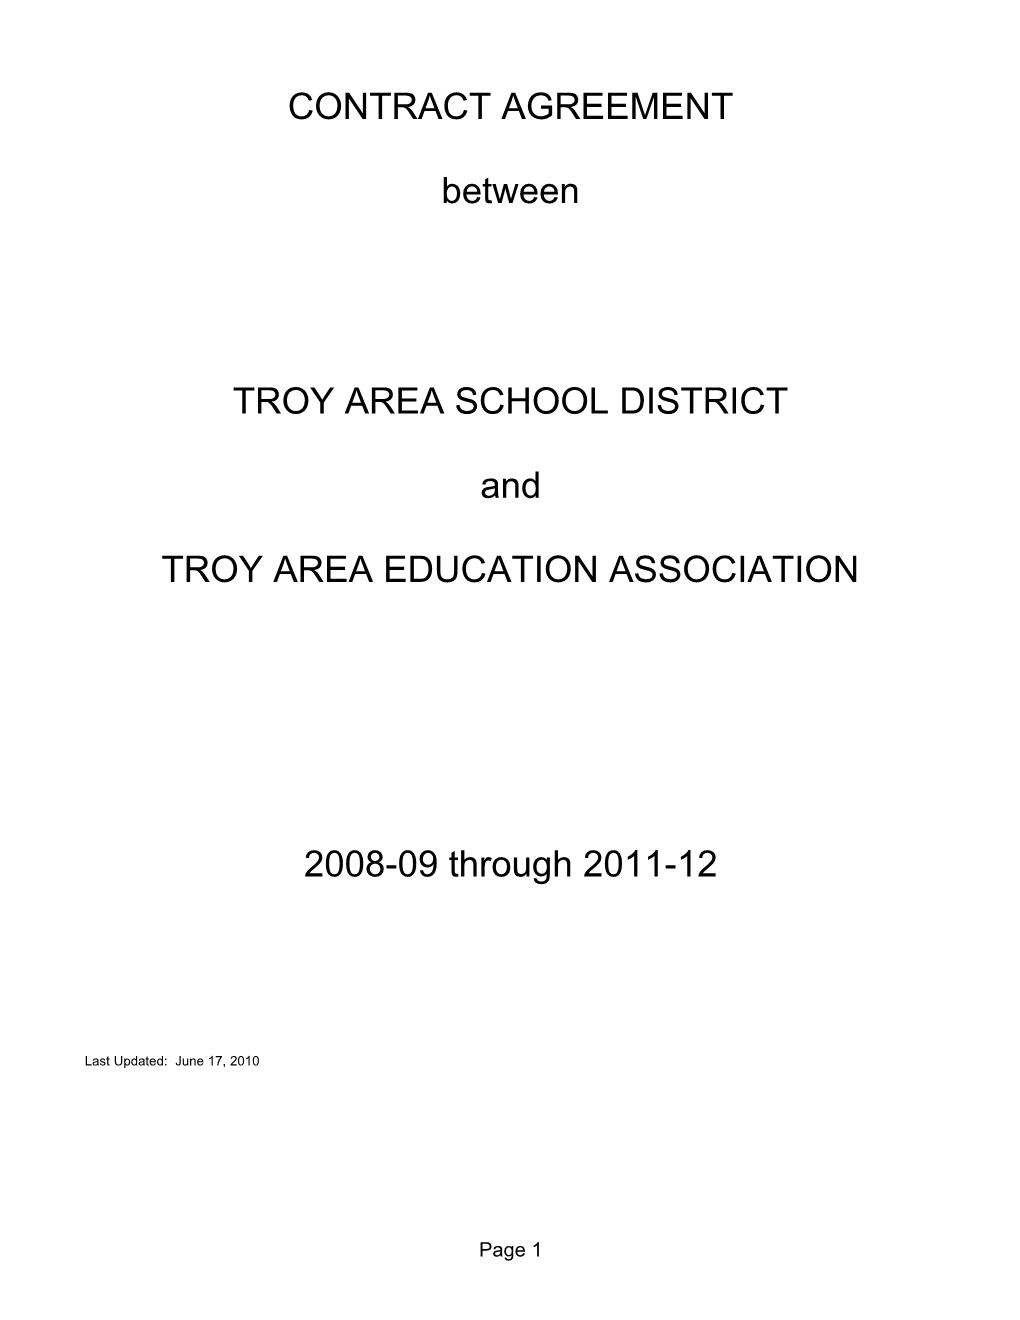 Troy Area Education Association